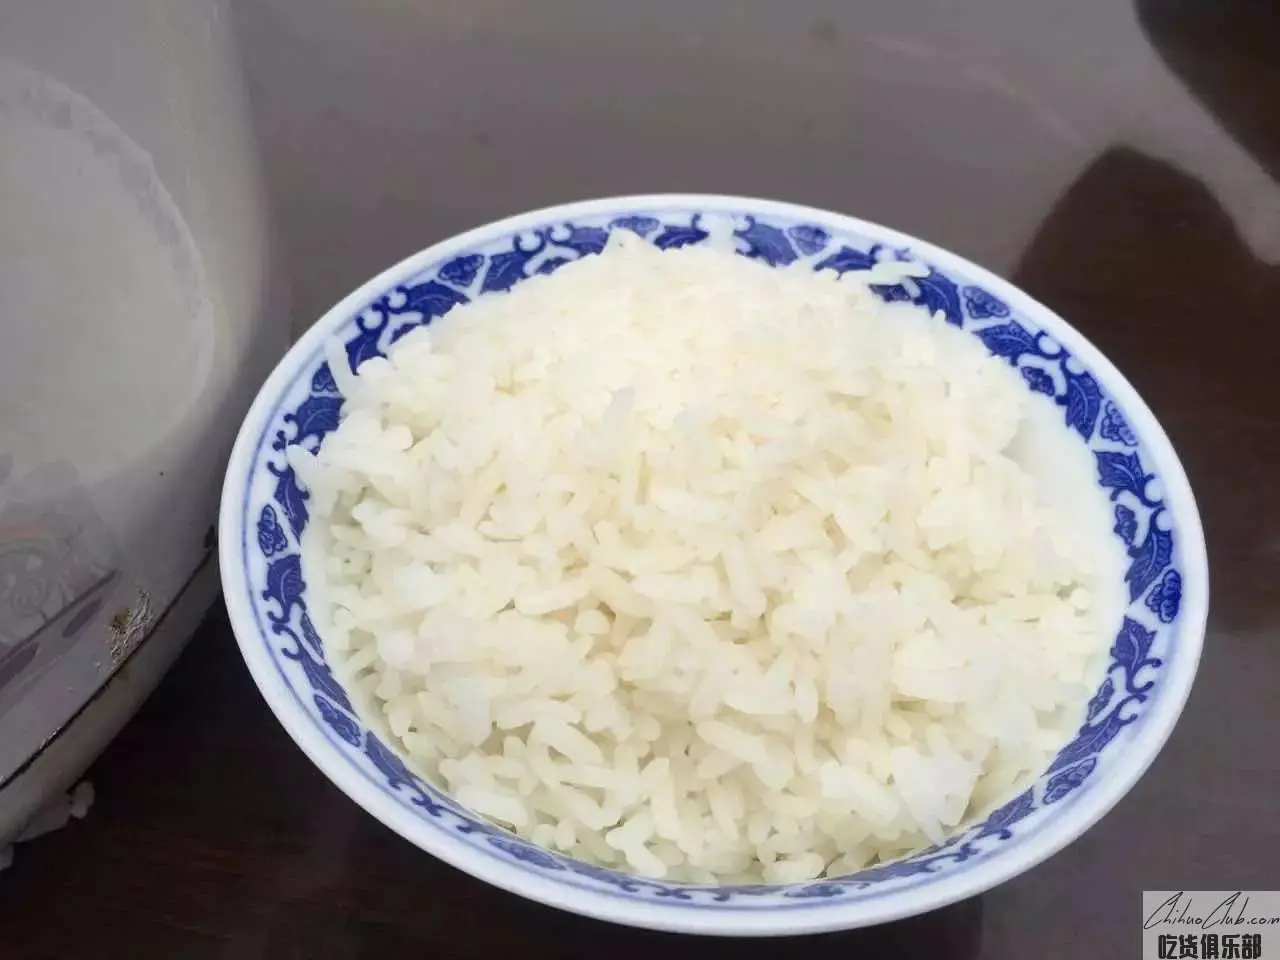 Zhuxi Tribute Rice